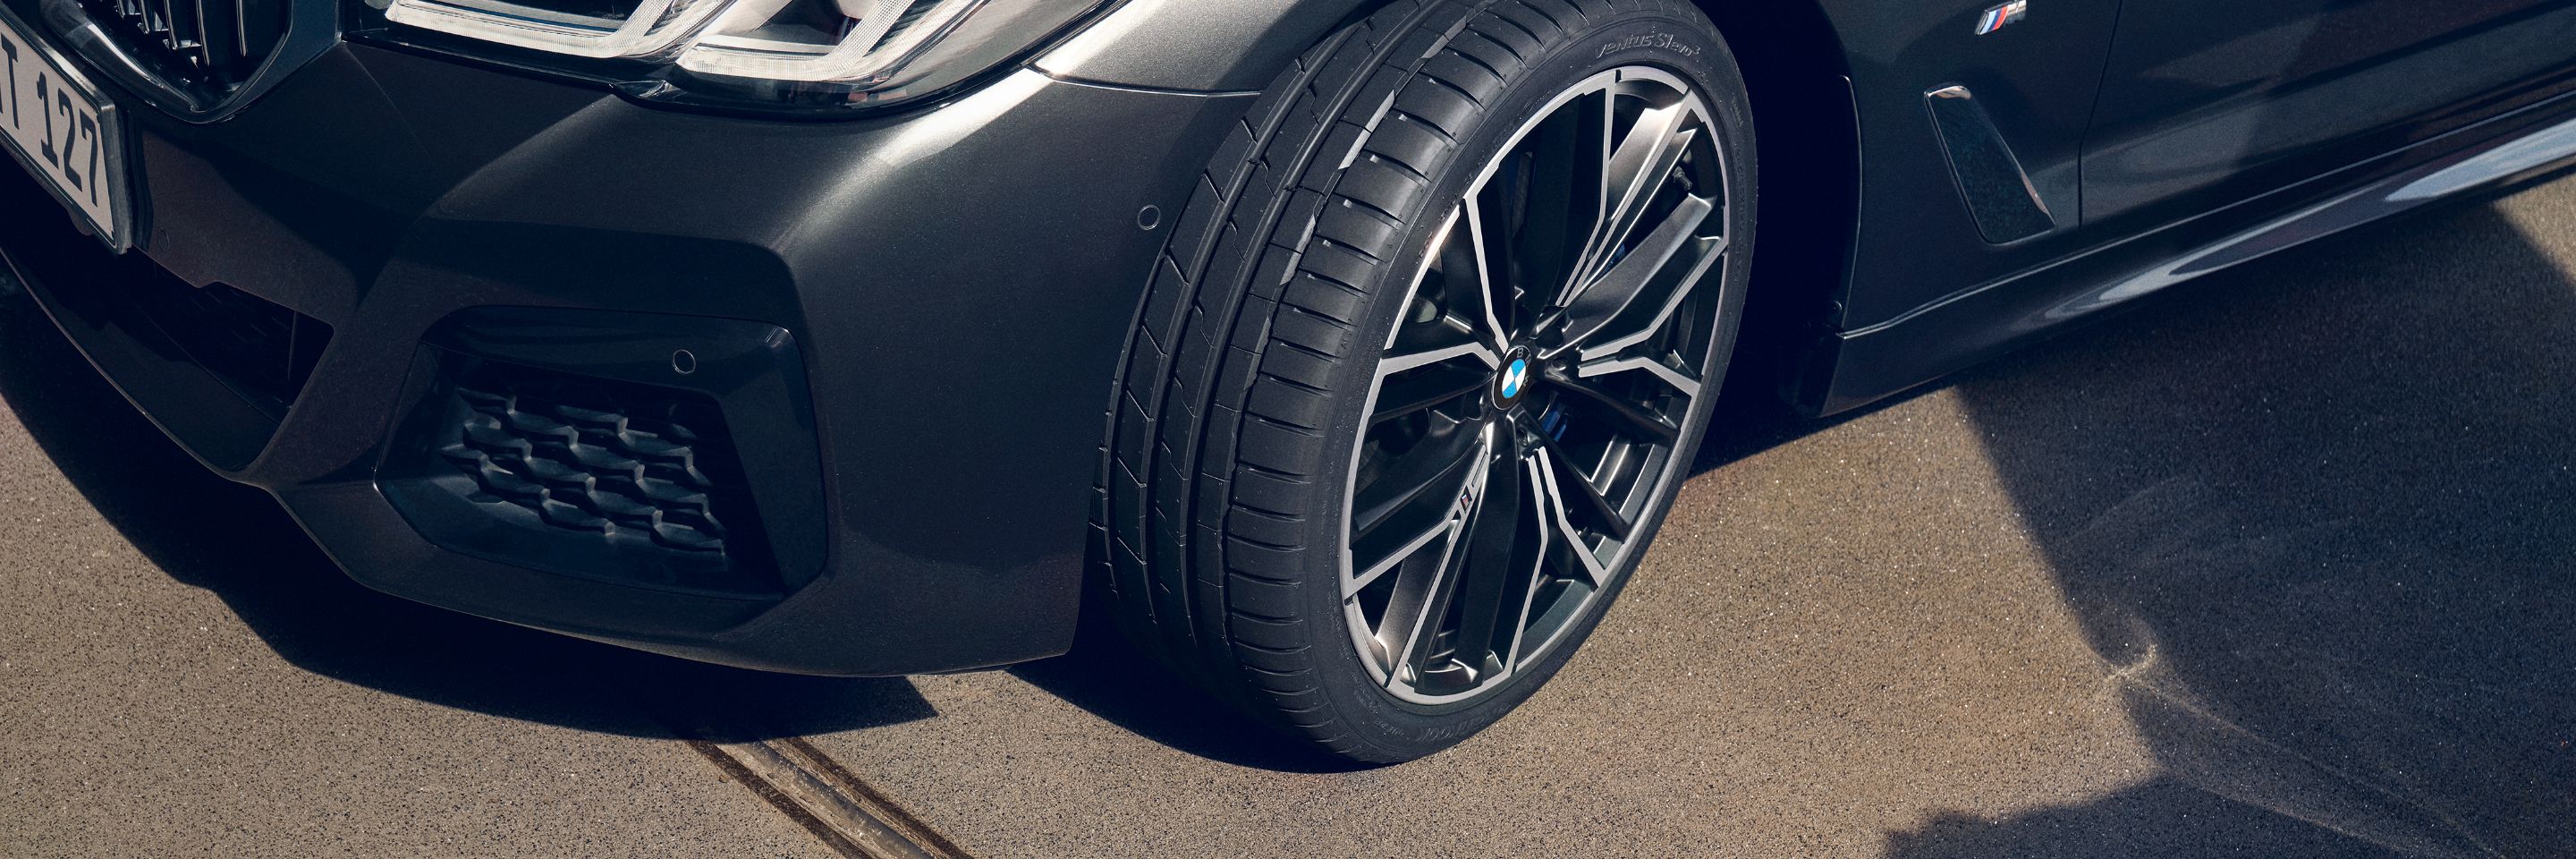 Hankook Tire & Technology – Tires – Passenger Car – Passenger Car Tire